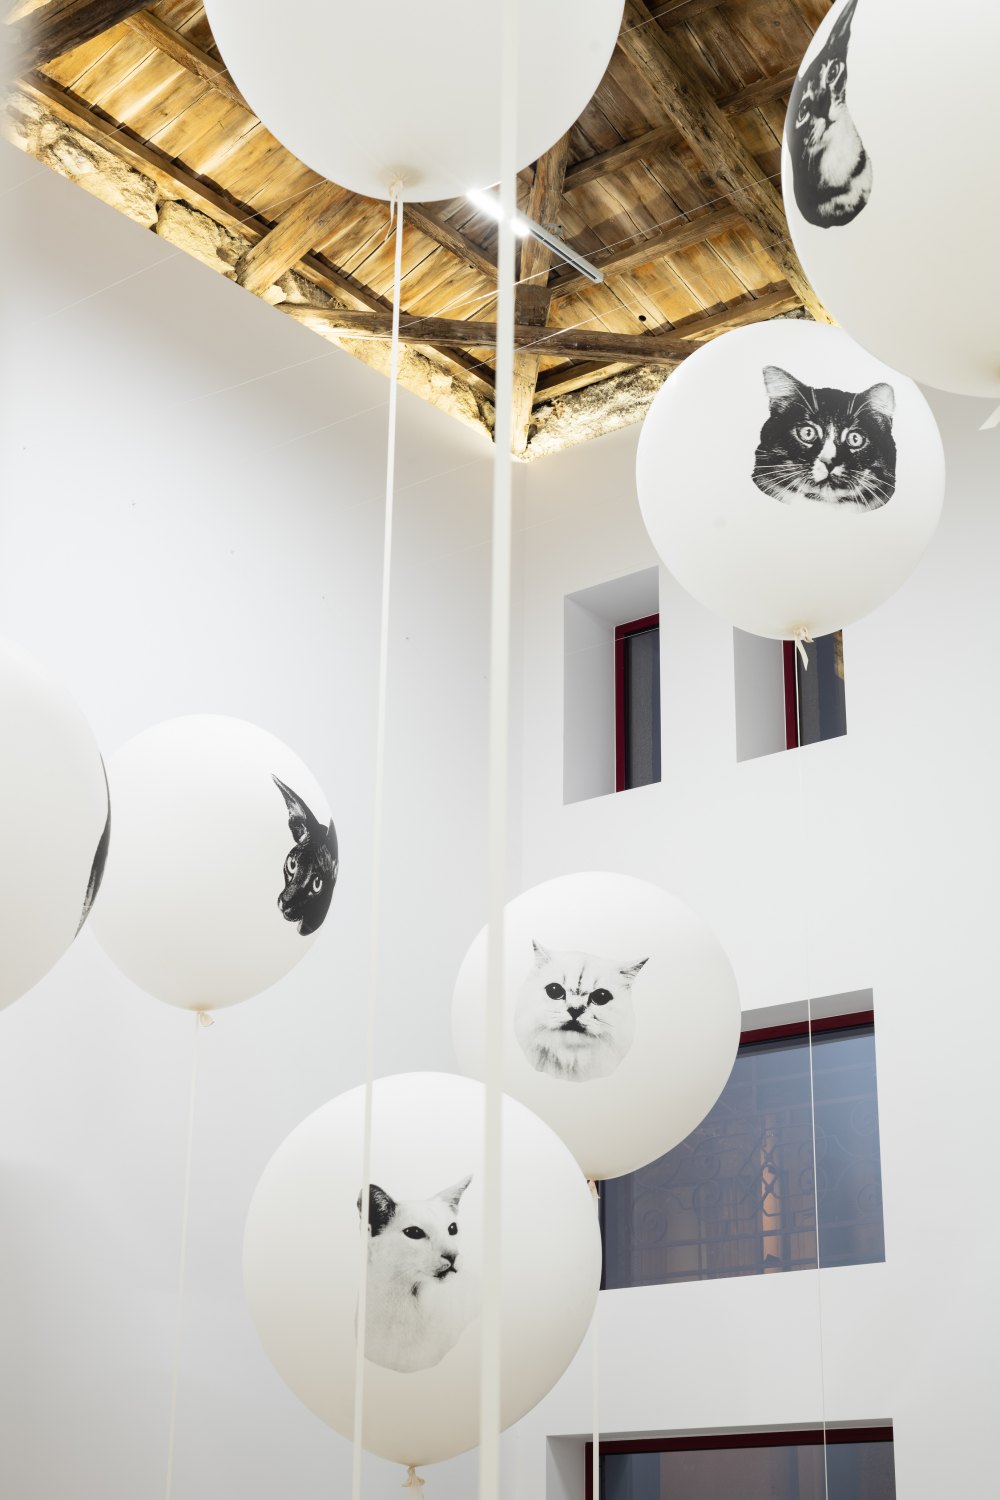 Installation view, John Knight, Headshots, a work in situ, Galerie Neu at the INTERMISSION, 2019